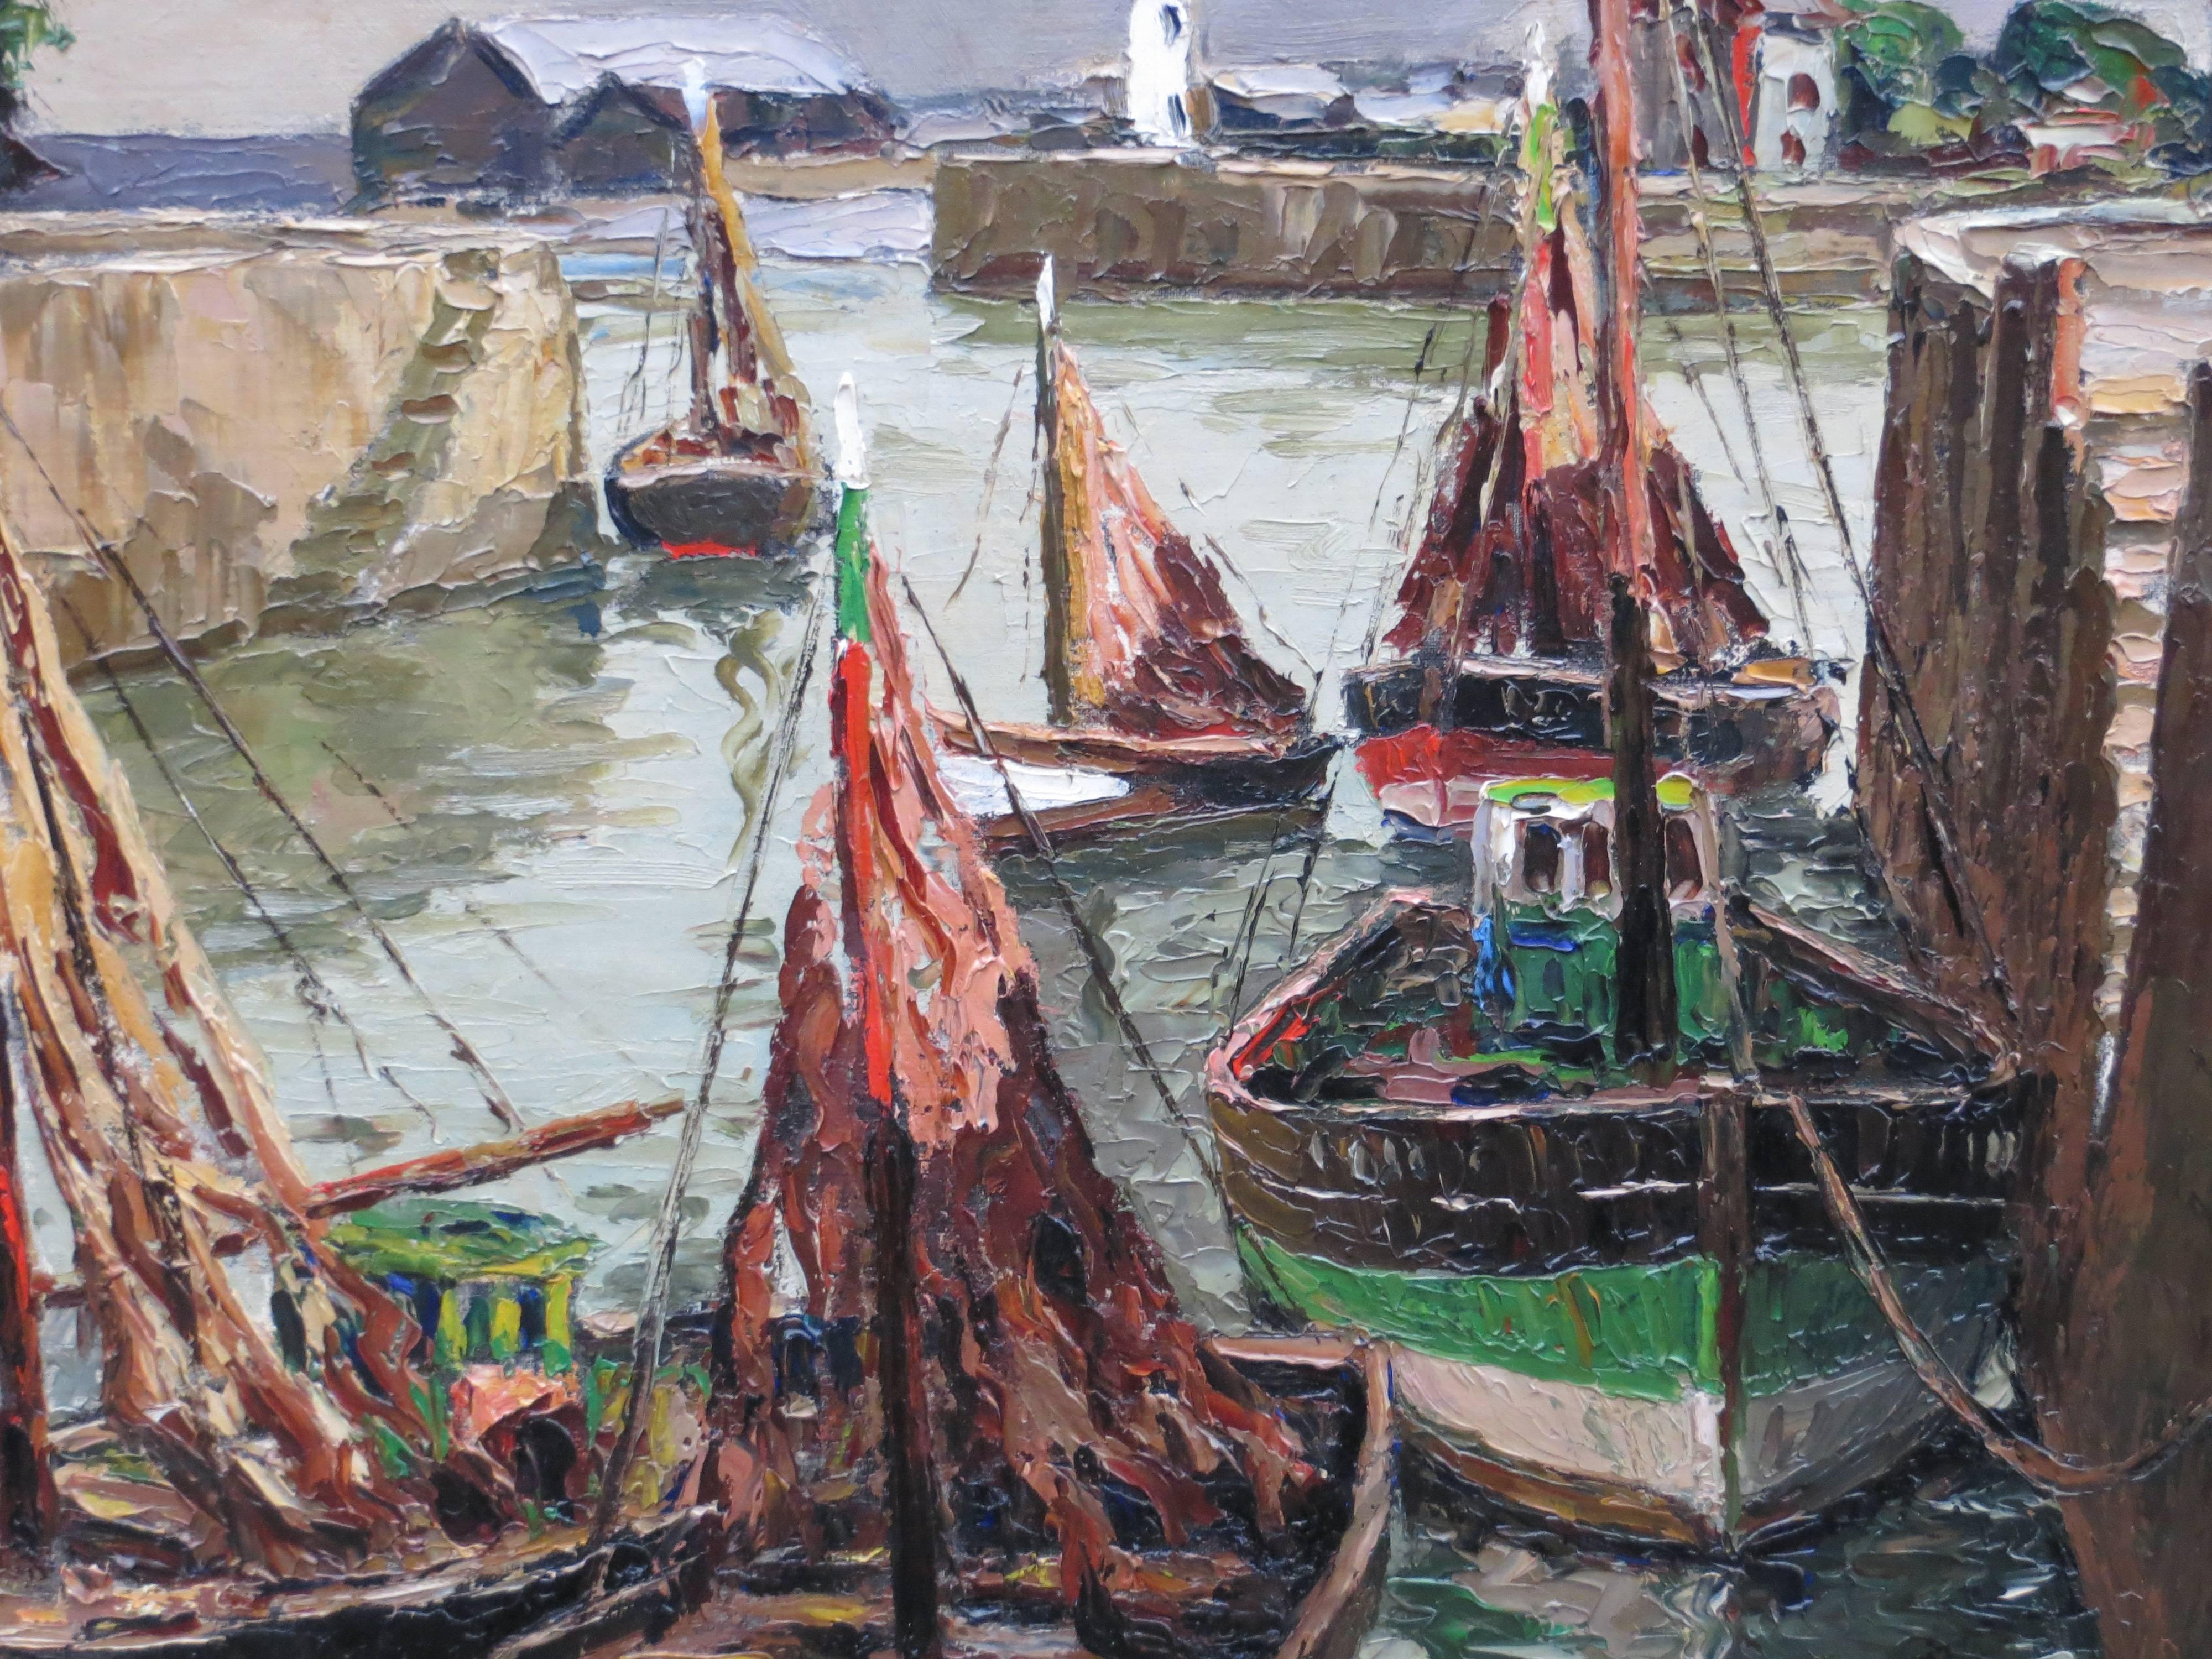 The Honfleur Harbour in NORMANDY - Painting by Adrien de Chanteloup